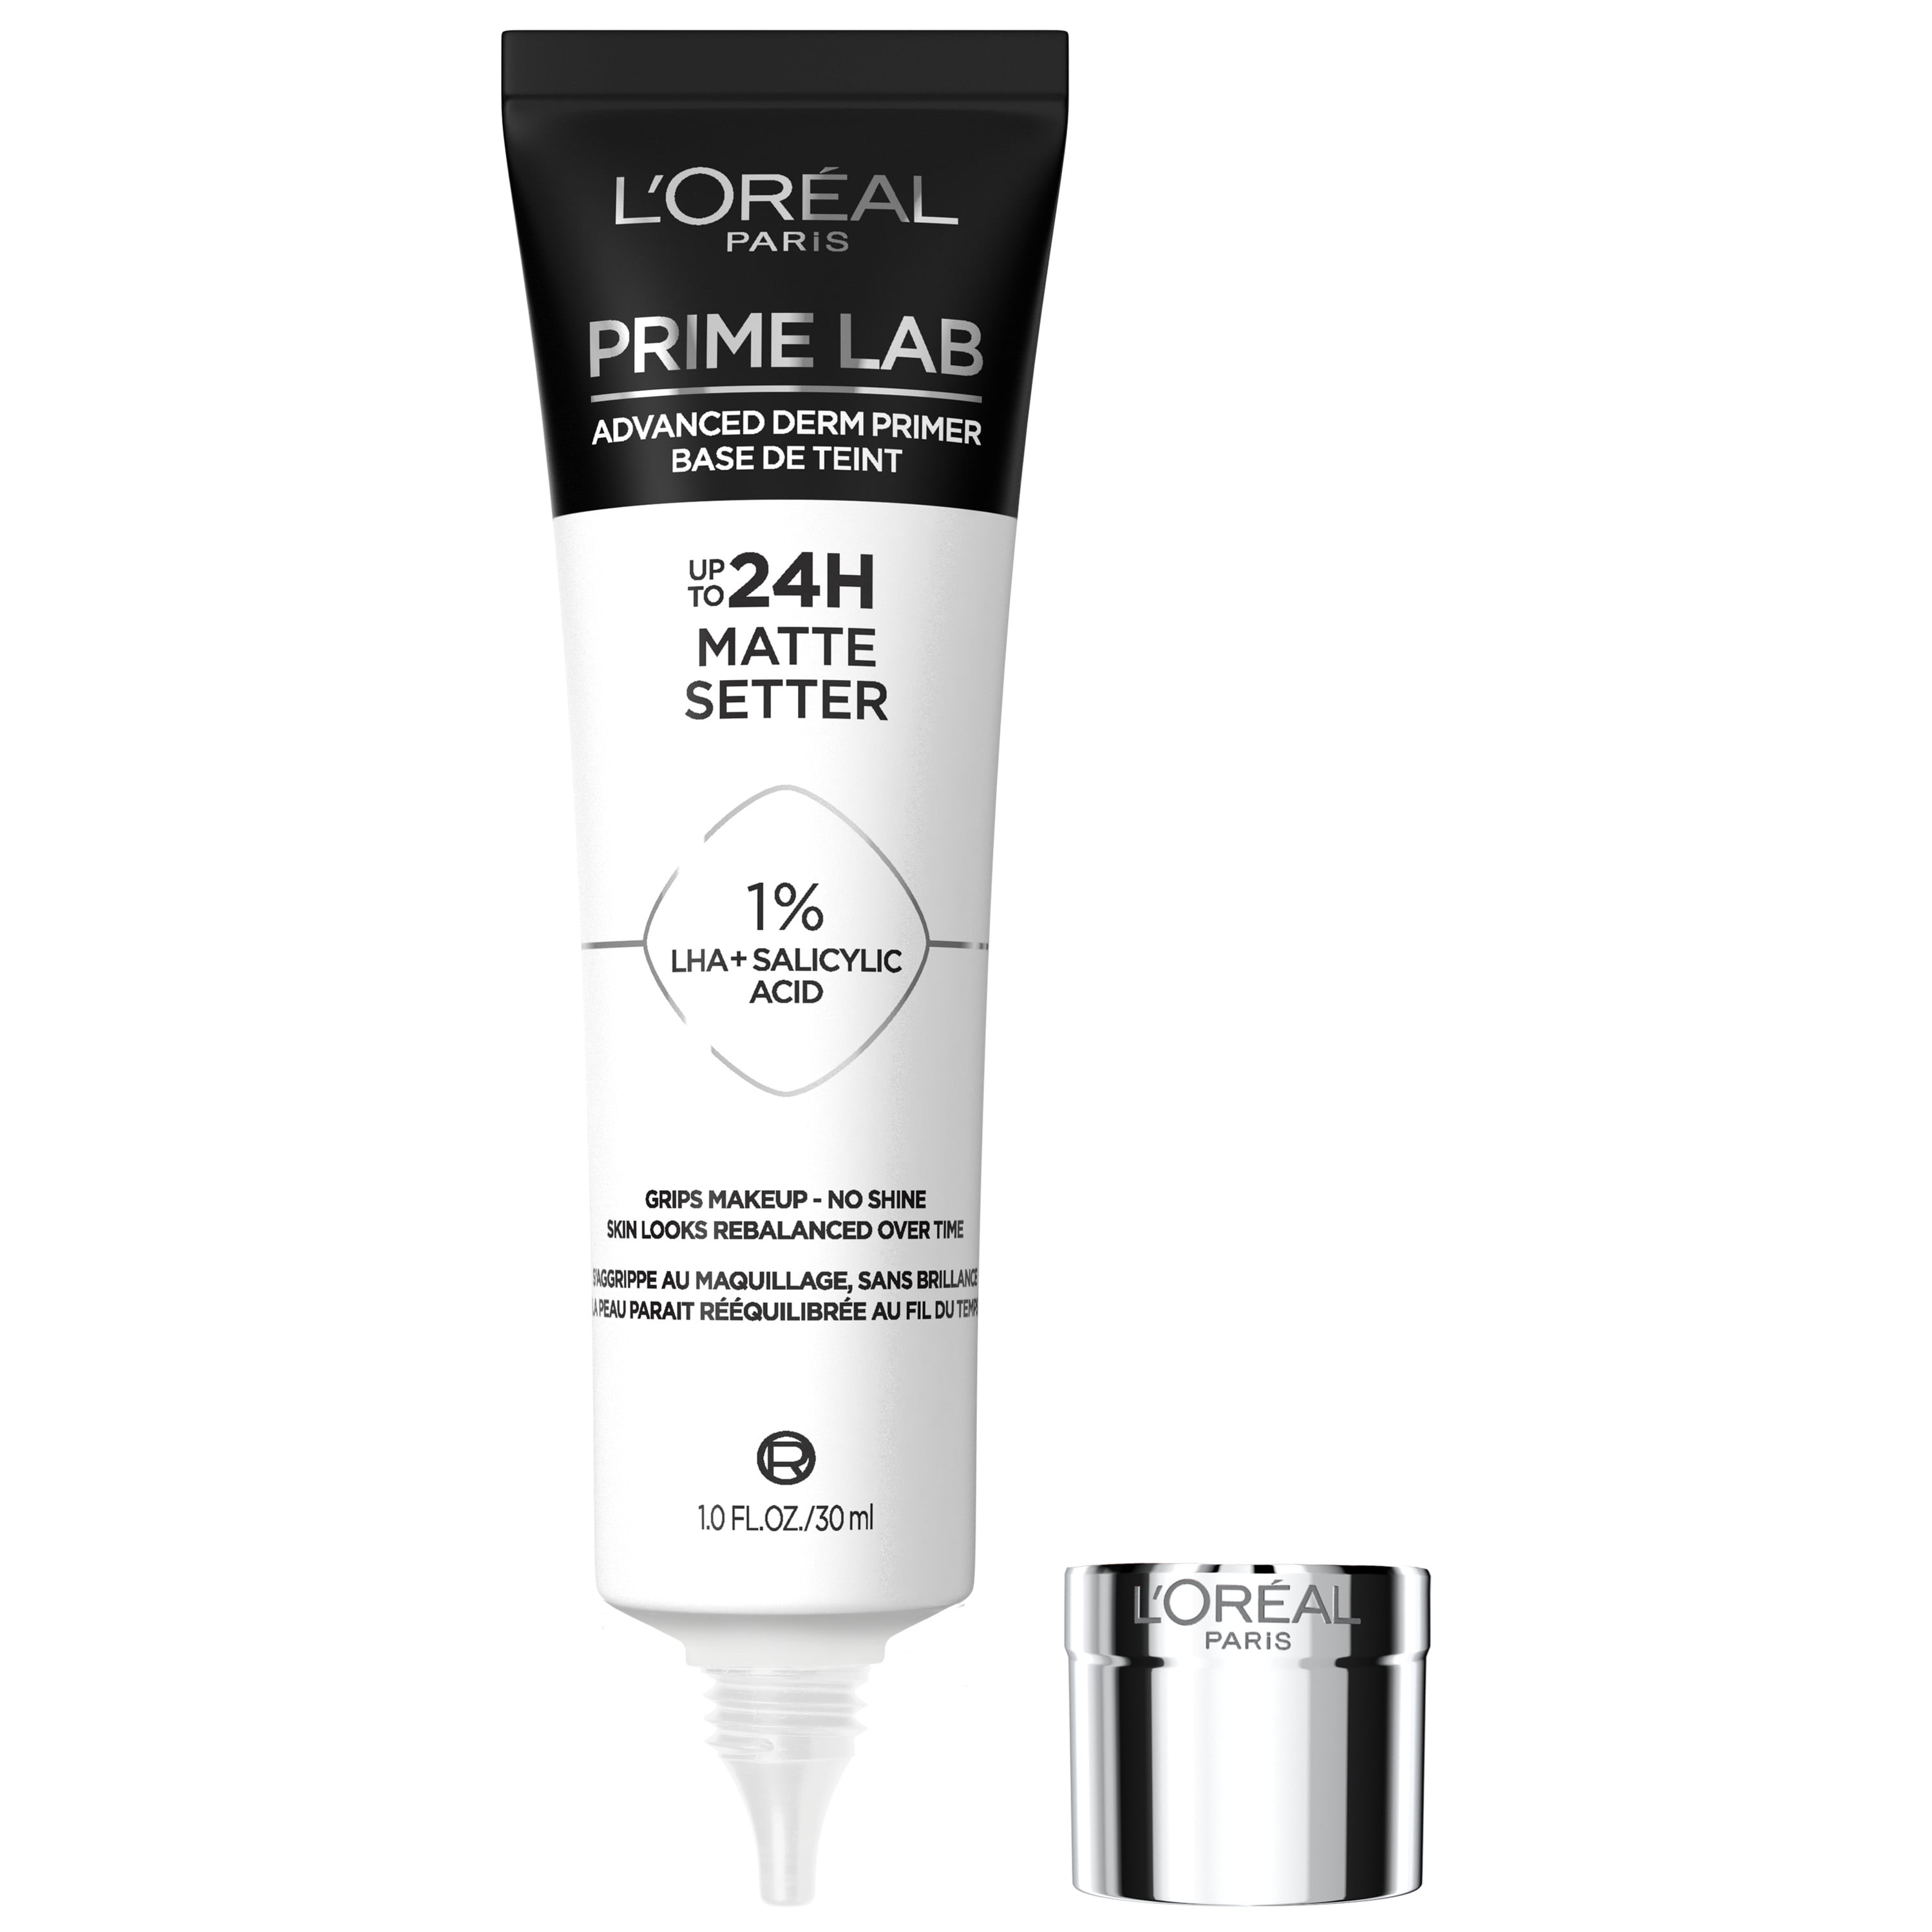 L'Oreal Paris Prime Lab Matte Setter Primer, No Shine, 1 fl oz